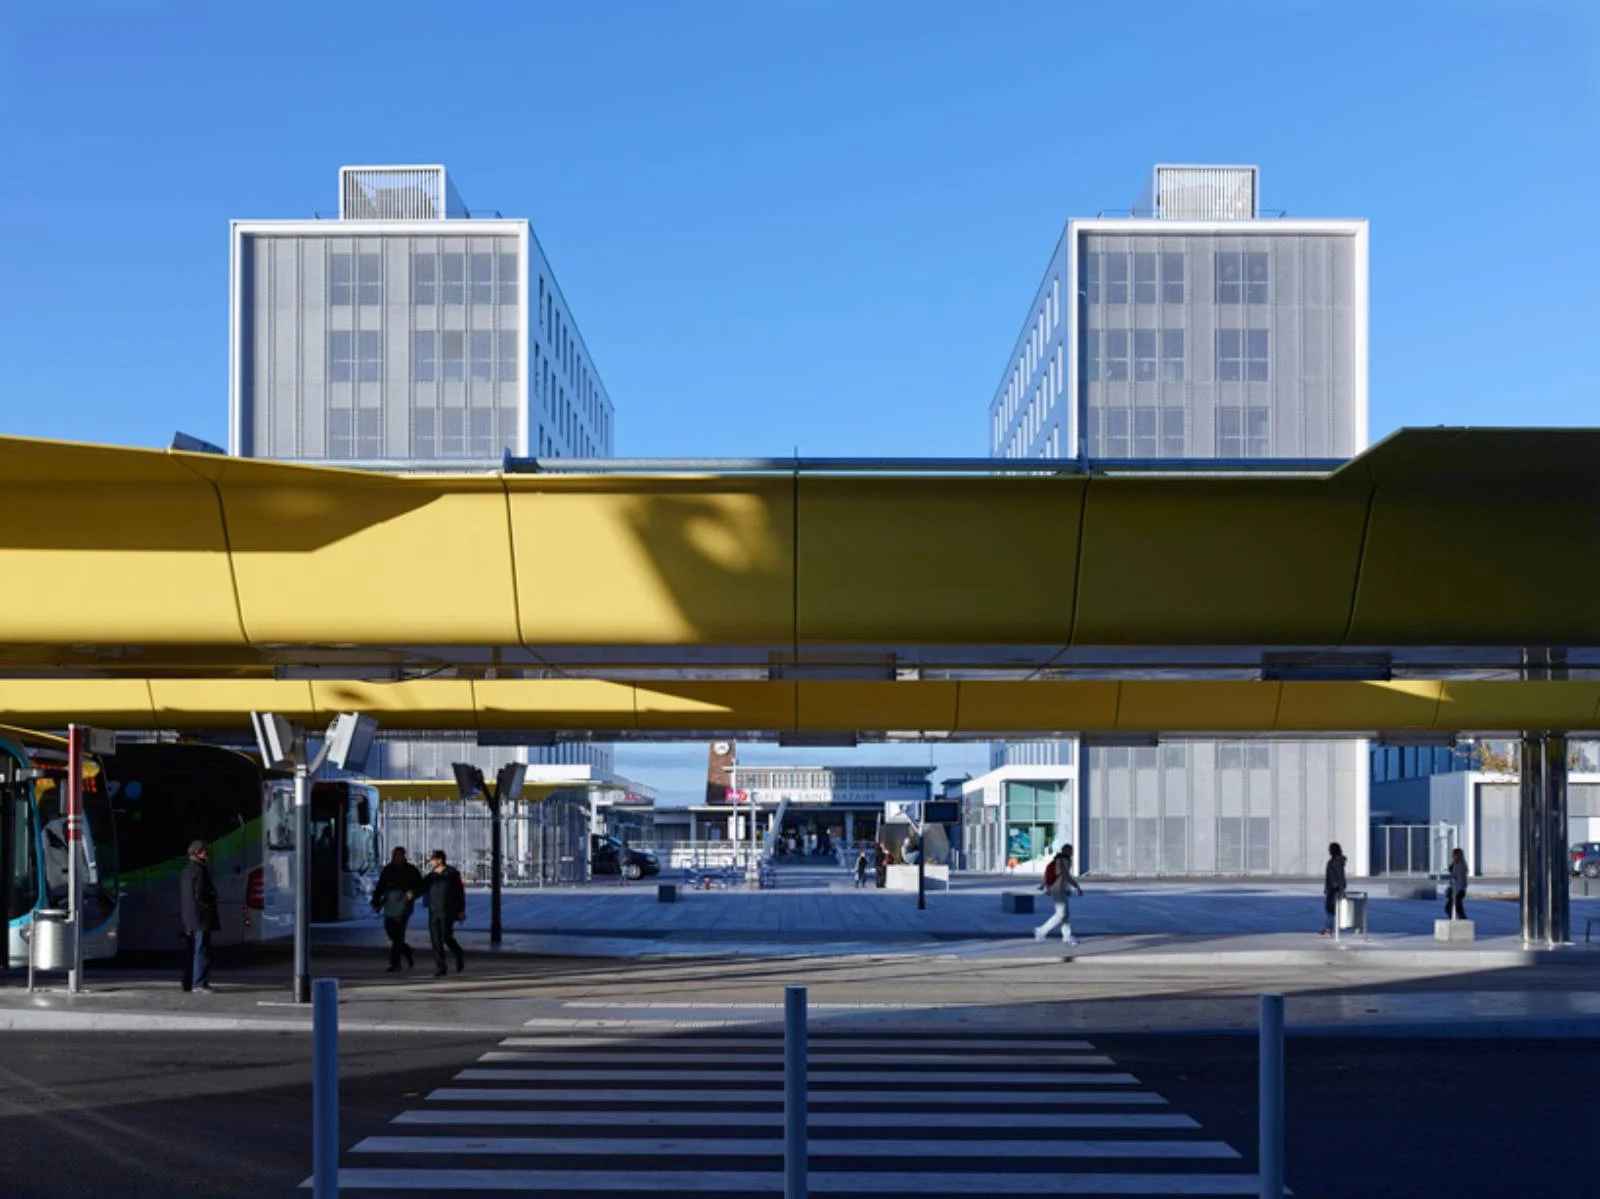 Saint Nazaire railway station by Tetrarc architects